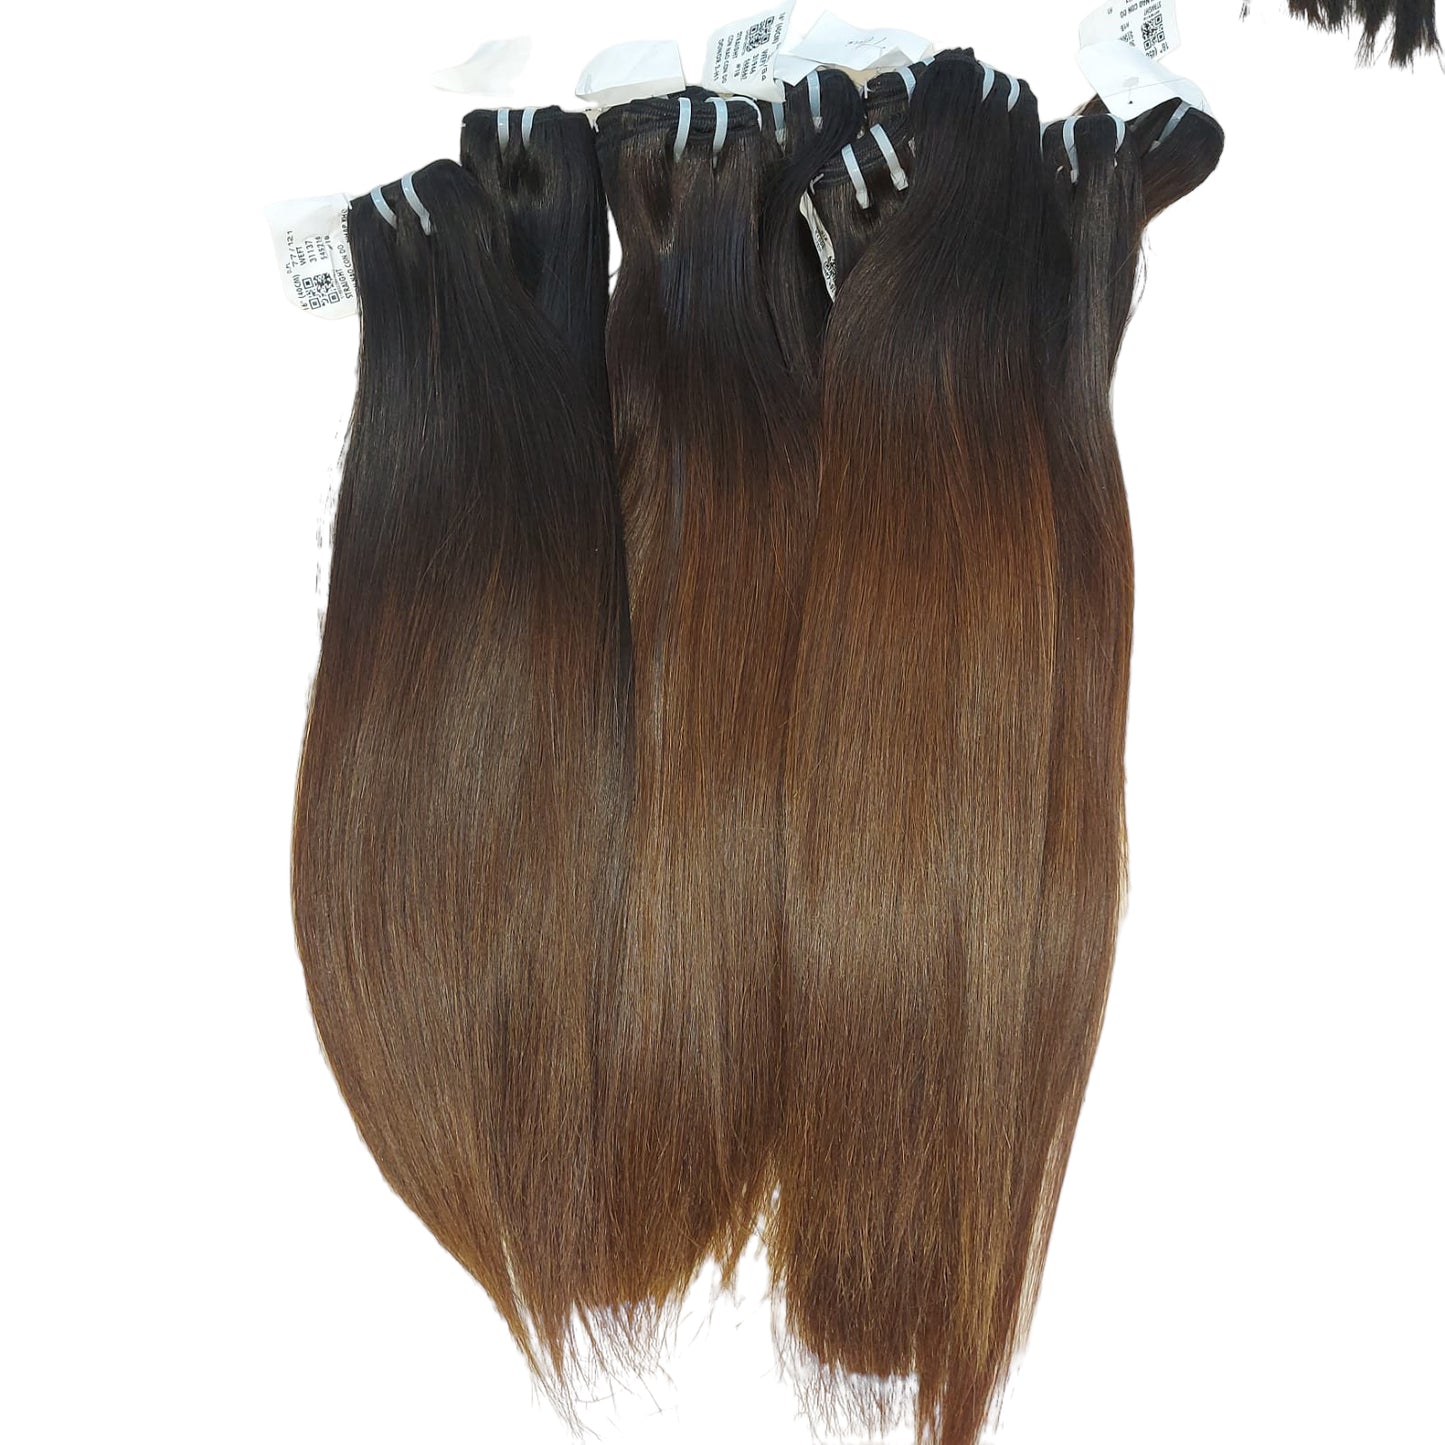 Vietnamese Hair Single Donor Ombré Brown 100g per bundle.